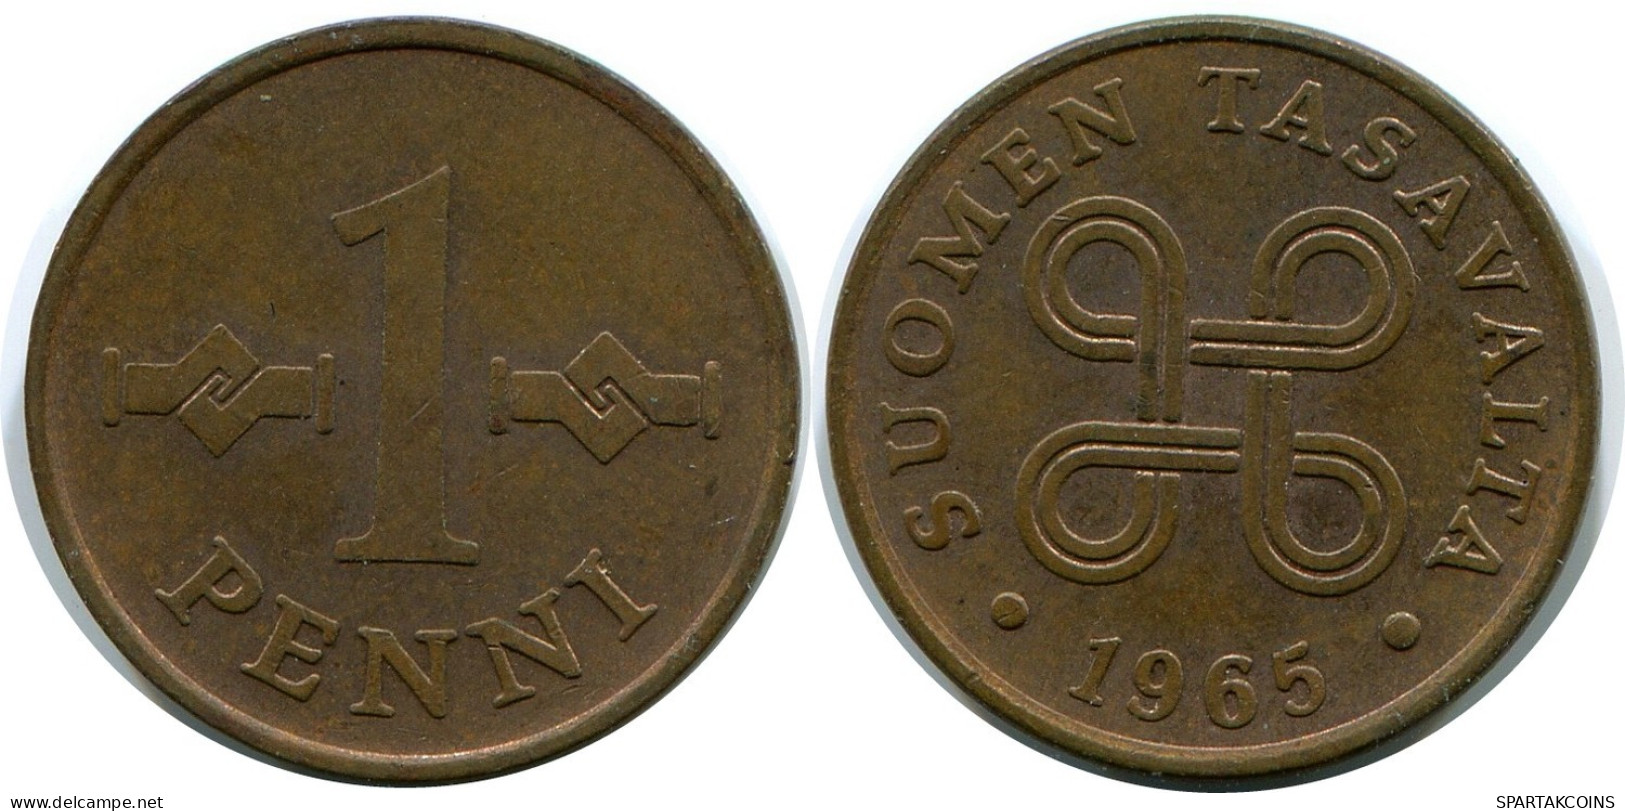 1 PENNI 1965 FINLAND Coin #AR911.U.A - Finlande